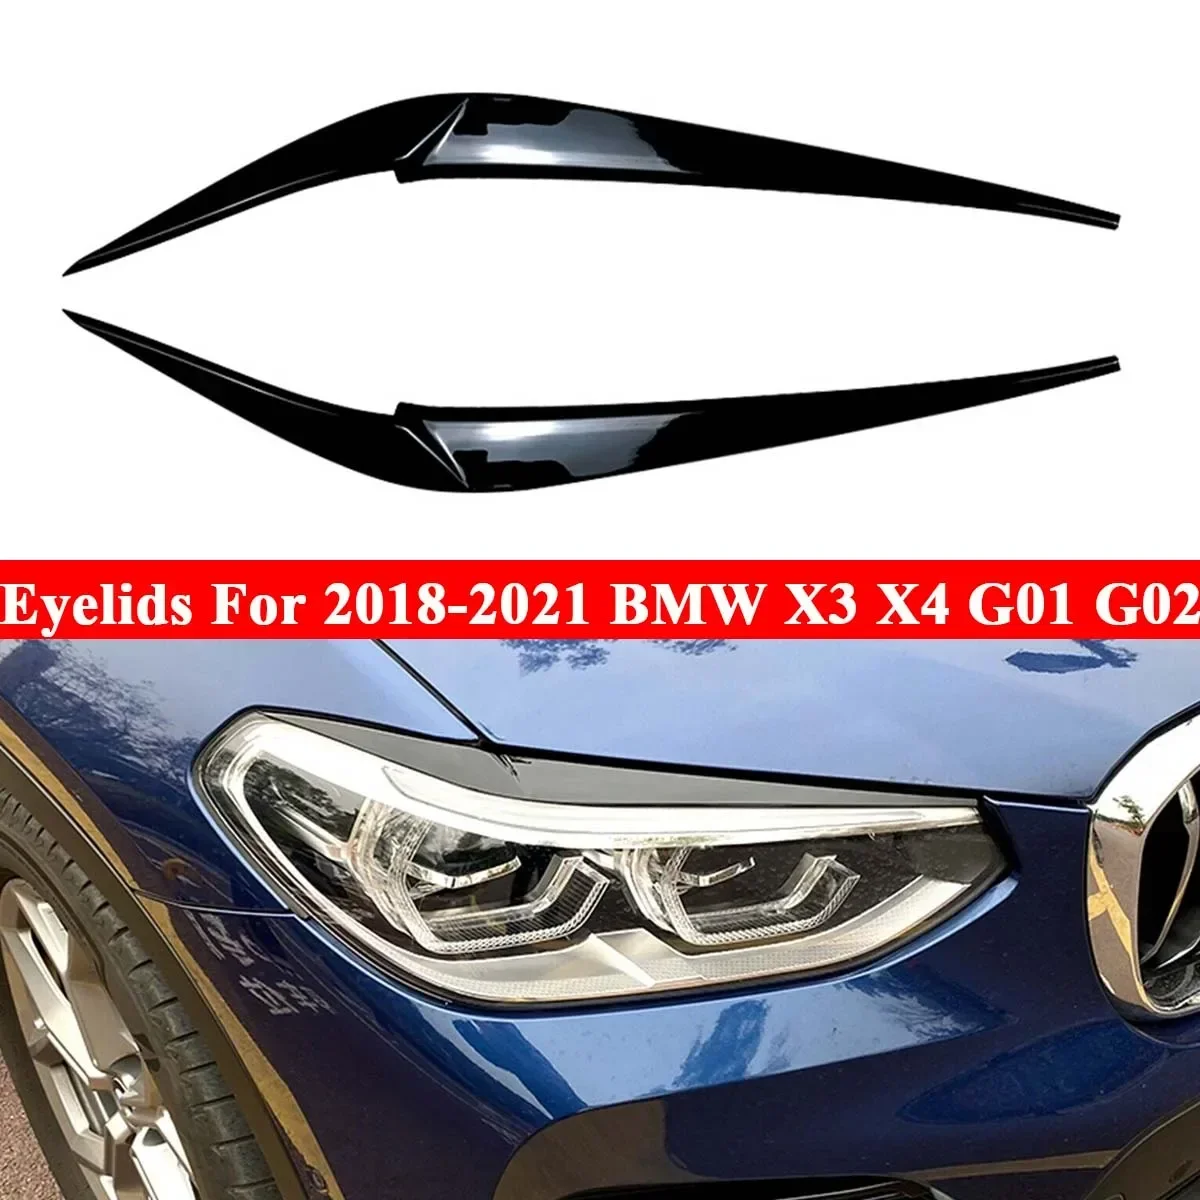 

For BMW X4 X3 G01 G02 2018 2019 2020 2021 Front Headlight Eyebrows Cover Eyelids Lids Sticker Trim Body Kit Car Accessories